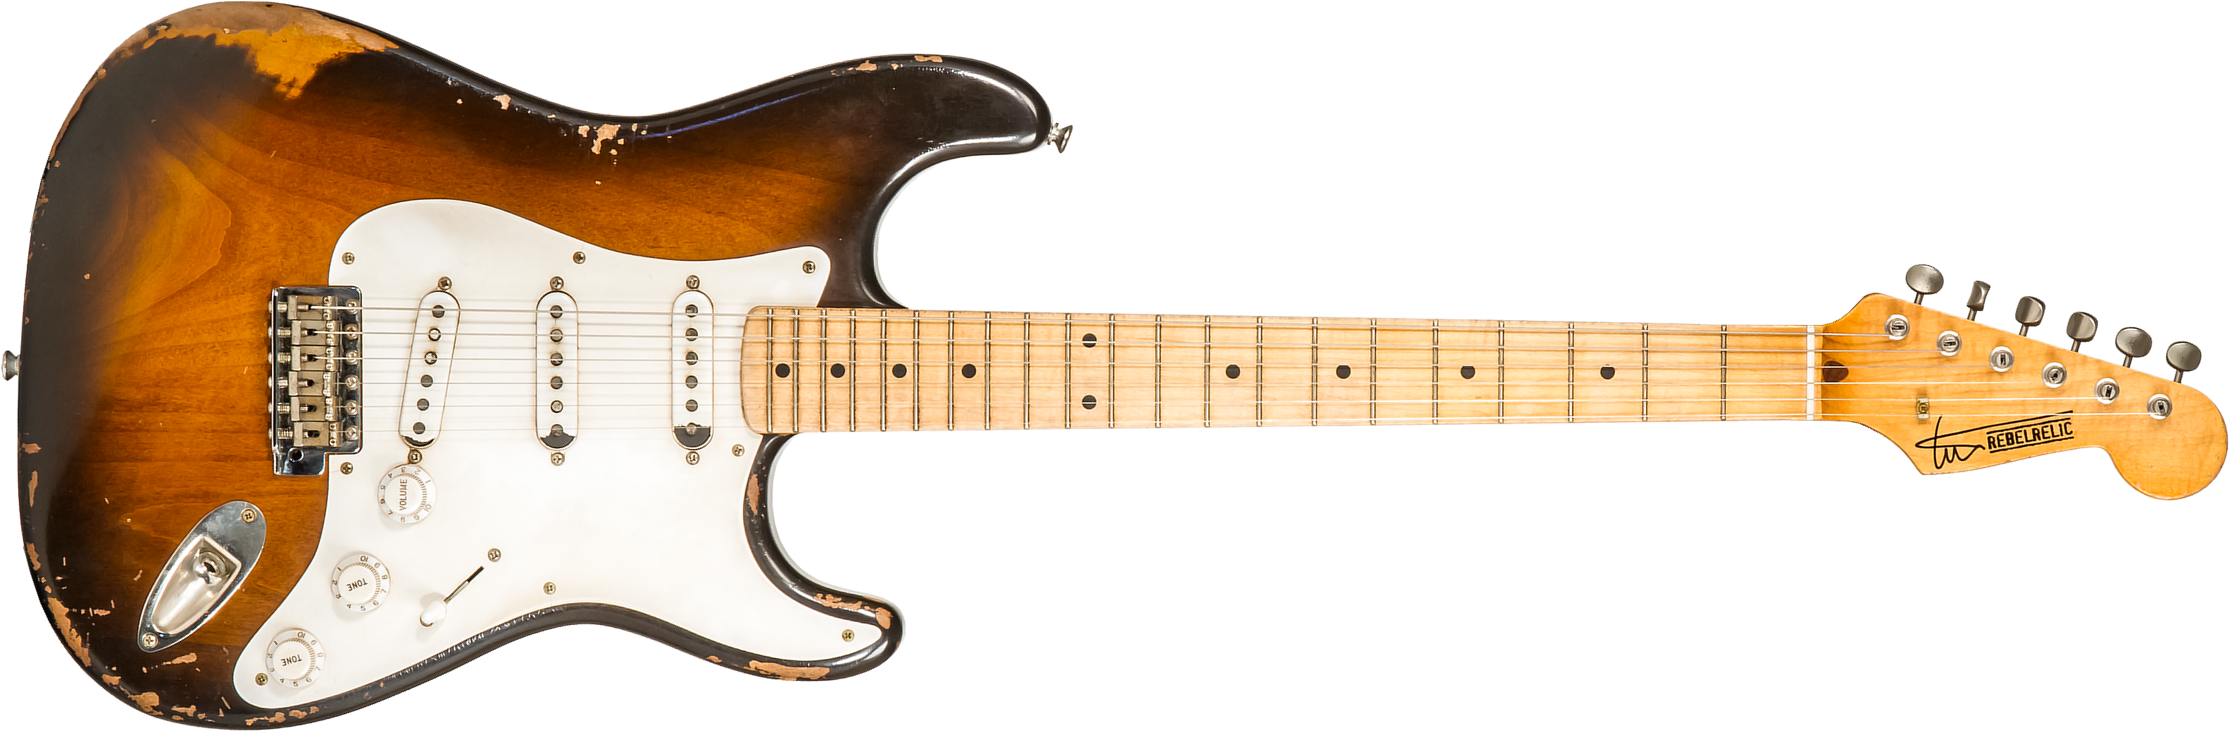 Rebelrelic S-series 54 3s Trem Mn #230103 - Medium Aged 2-tone Sunburst - E-Gitarre in Str-Form - Main picture